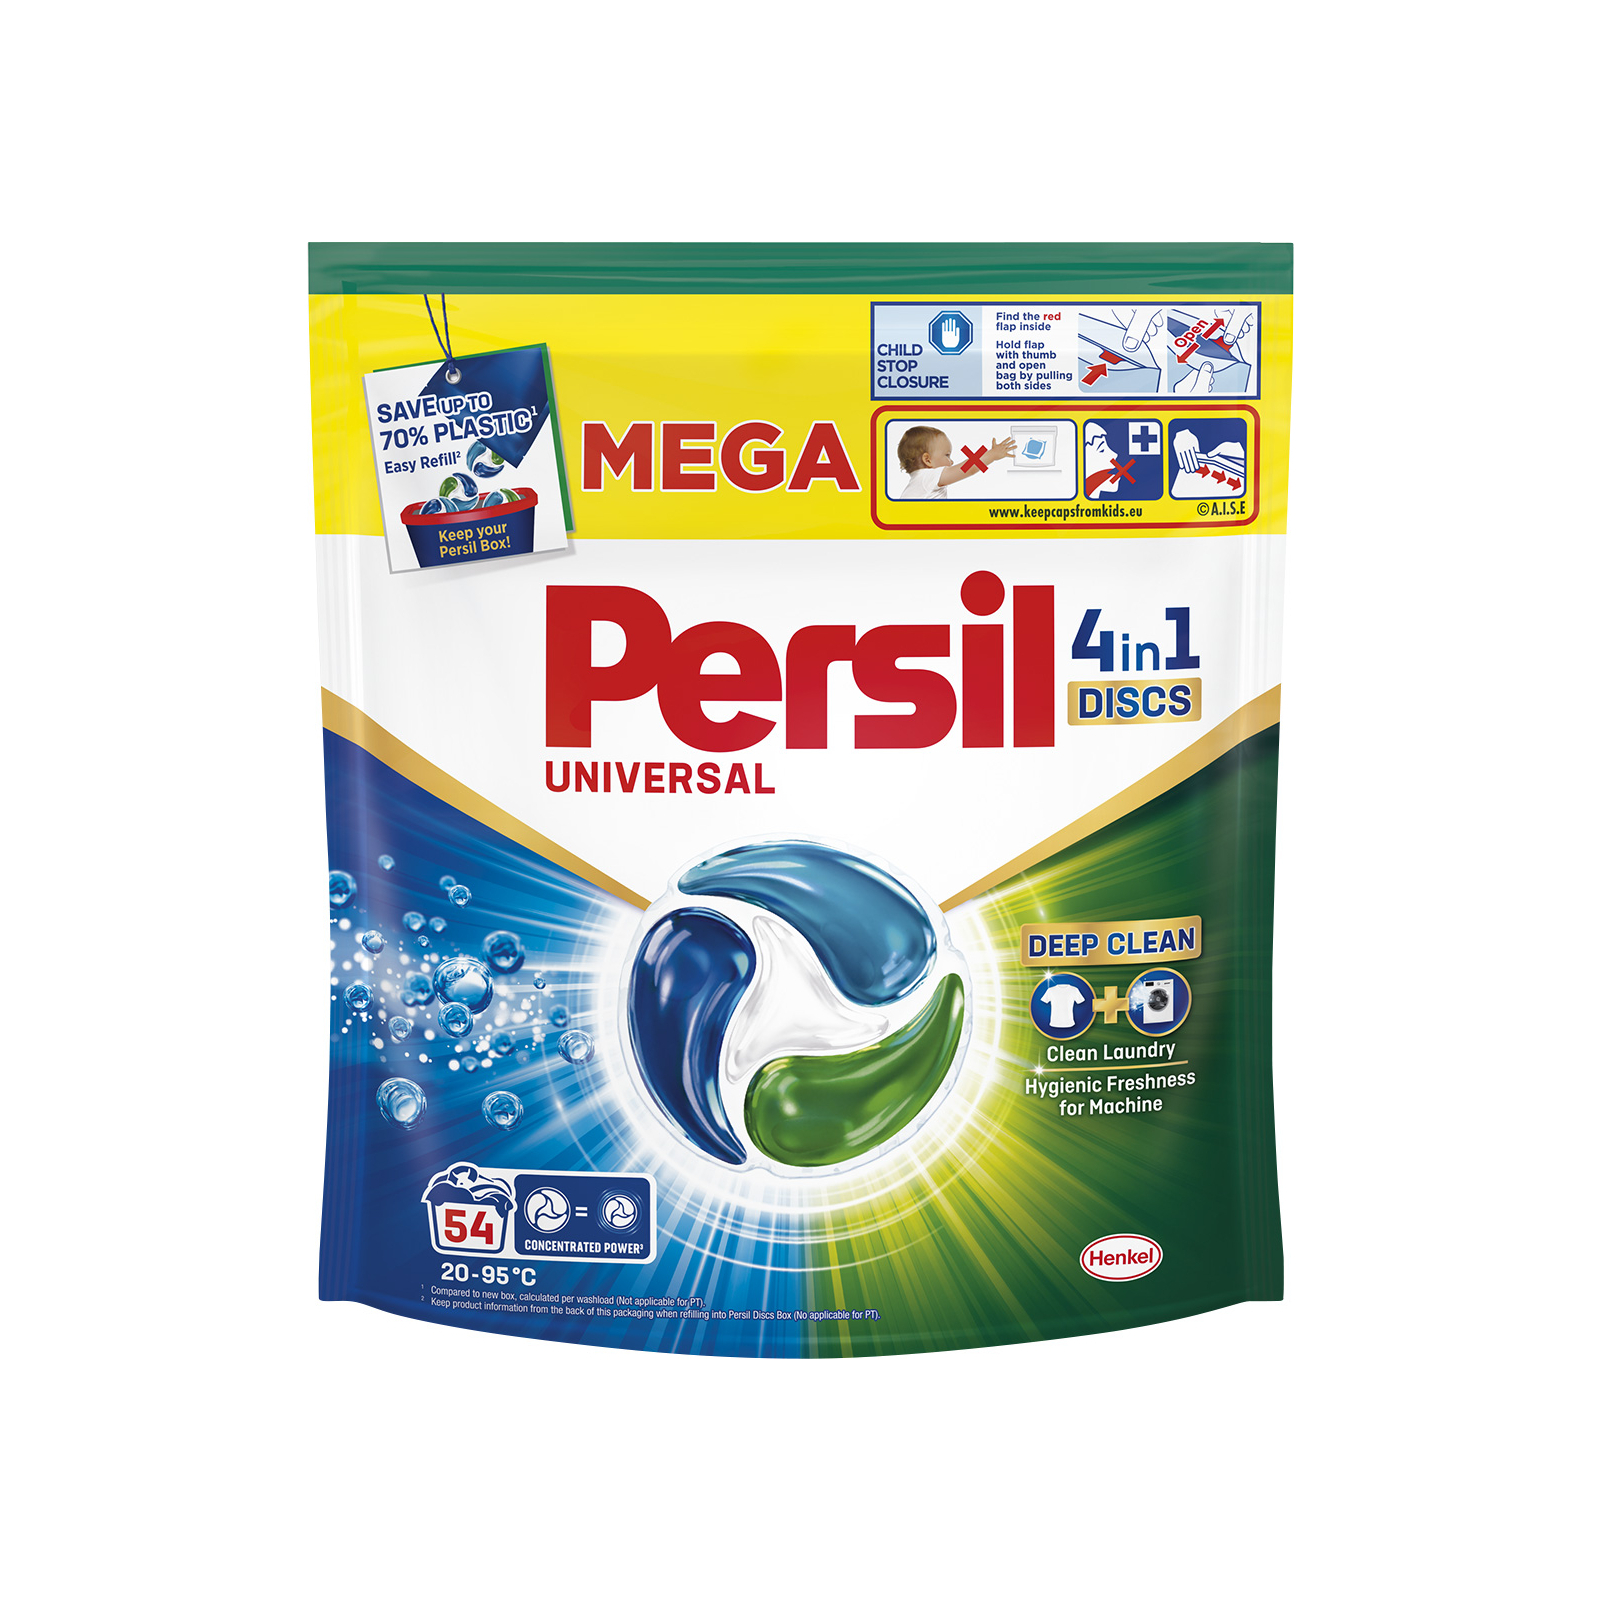 Капсулы для стирки Persil 4in1 Discs Universal Deep Clean 54 шт. (9000101801323)